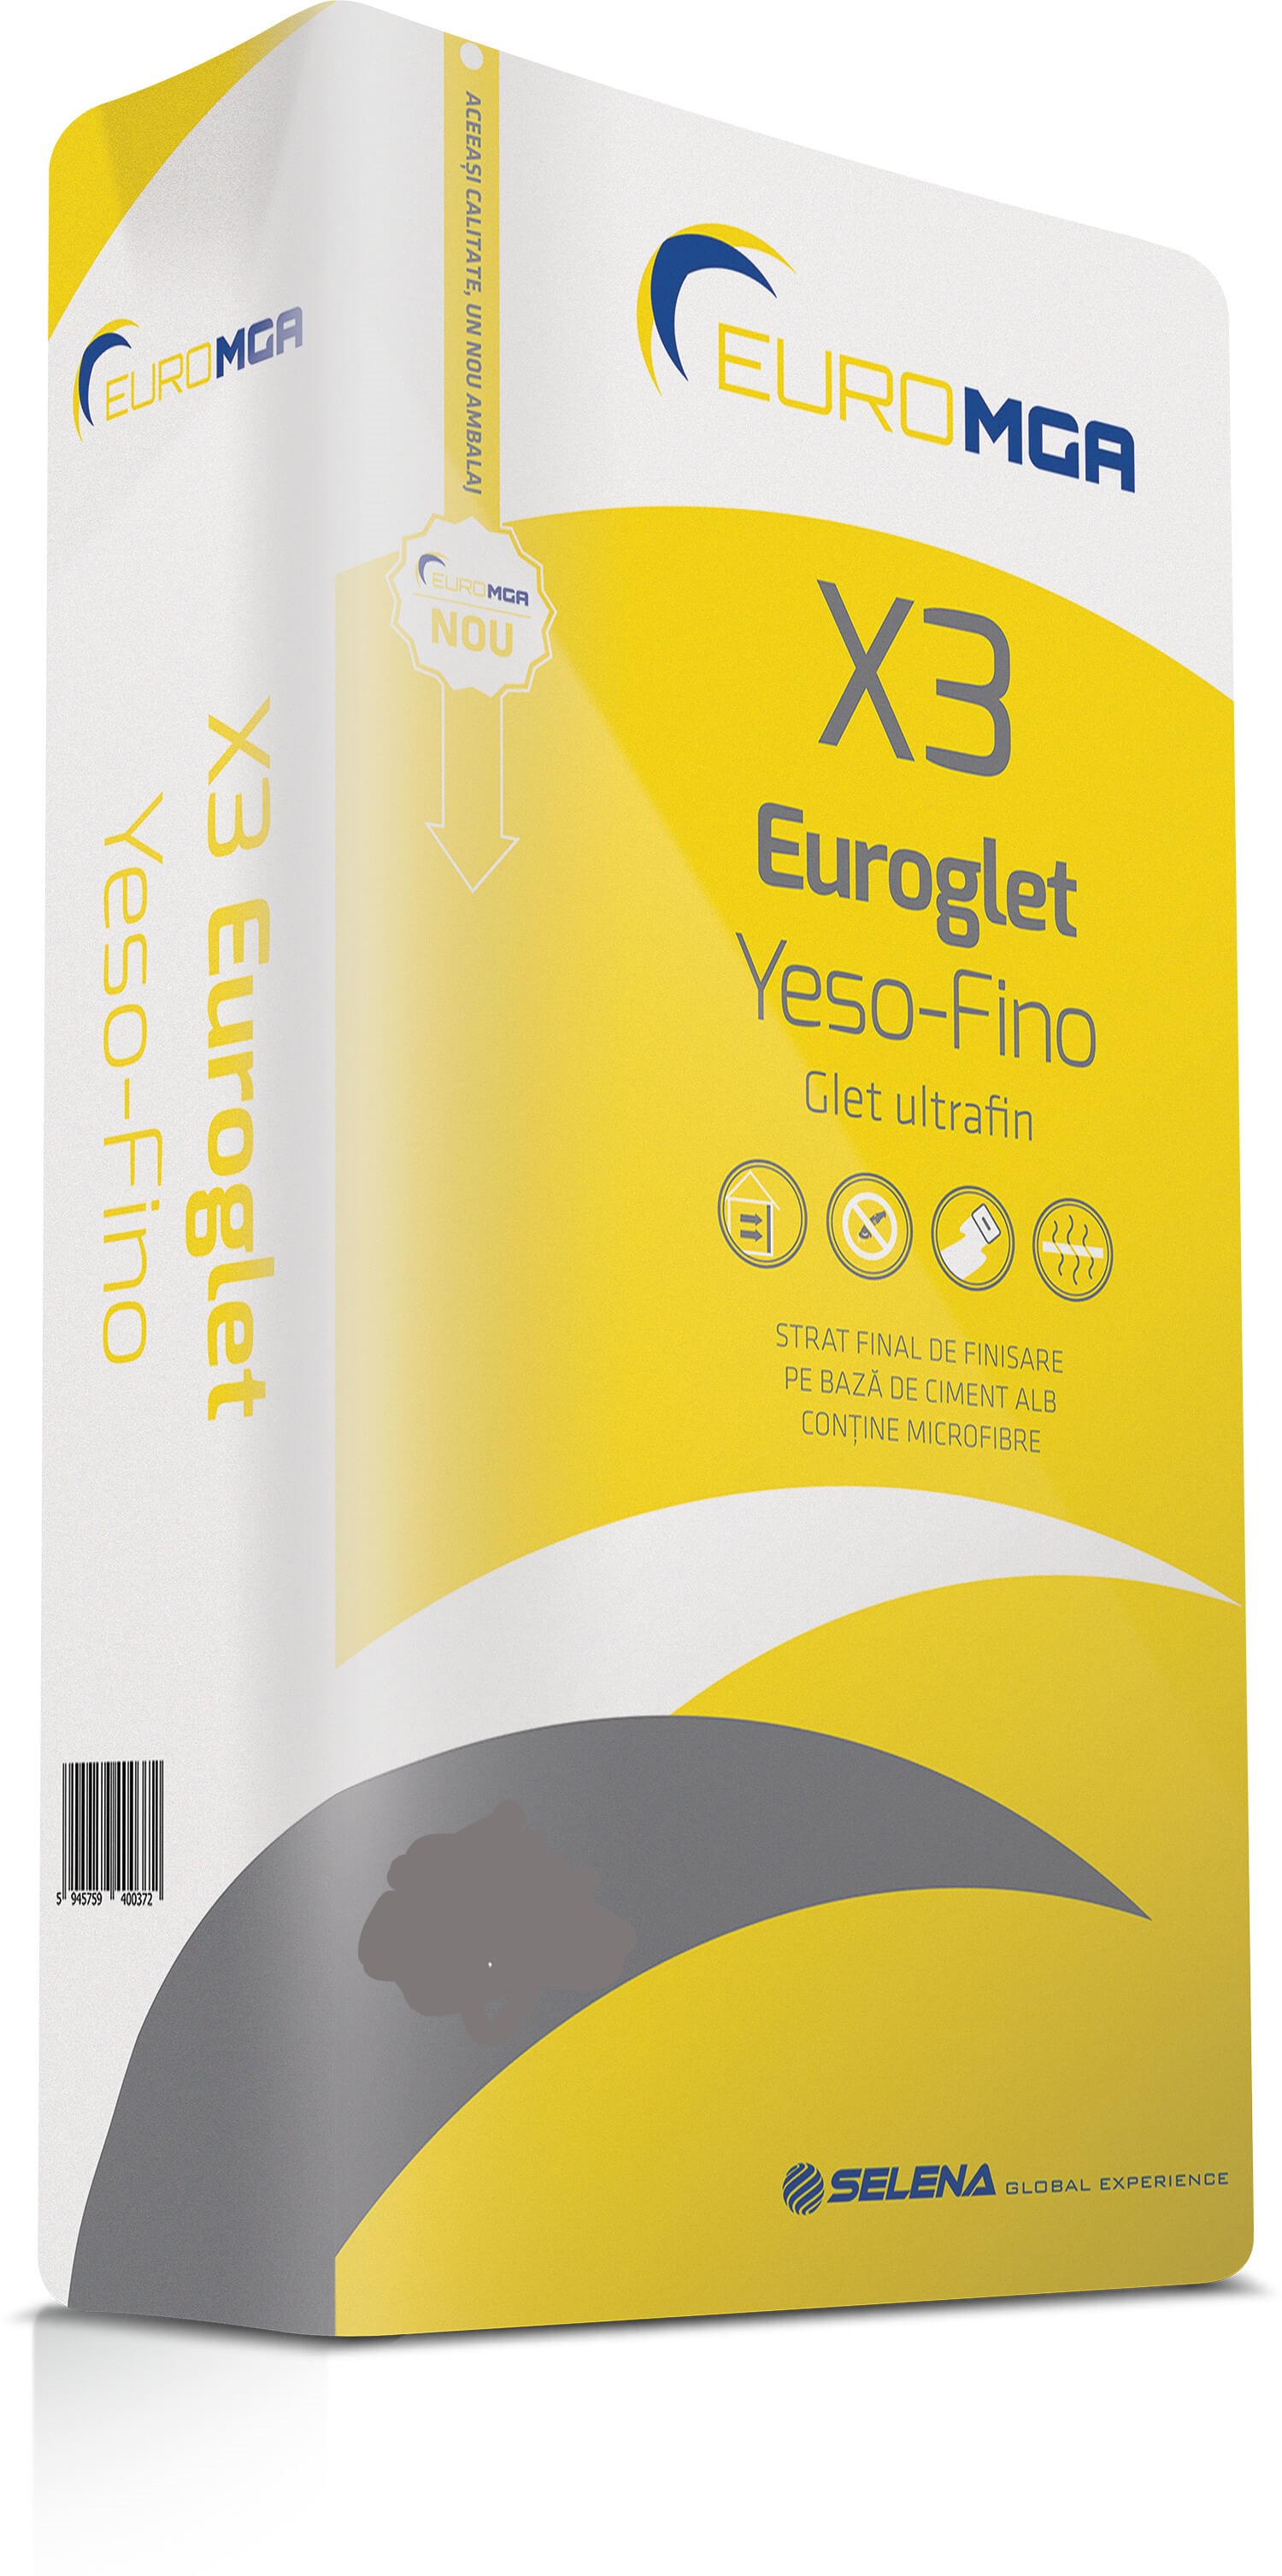 Gleturi - Ultra-fine finishing glet X3 Euroglet Yeso-Fino EuroMGA 5 kg, https:maxbau.ro